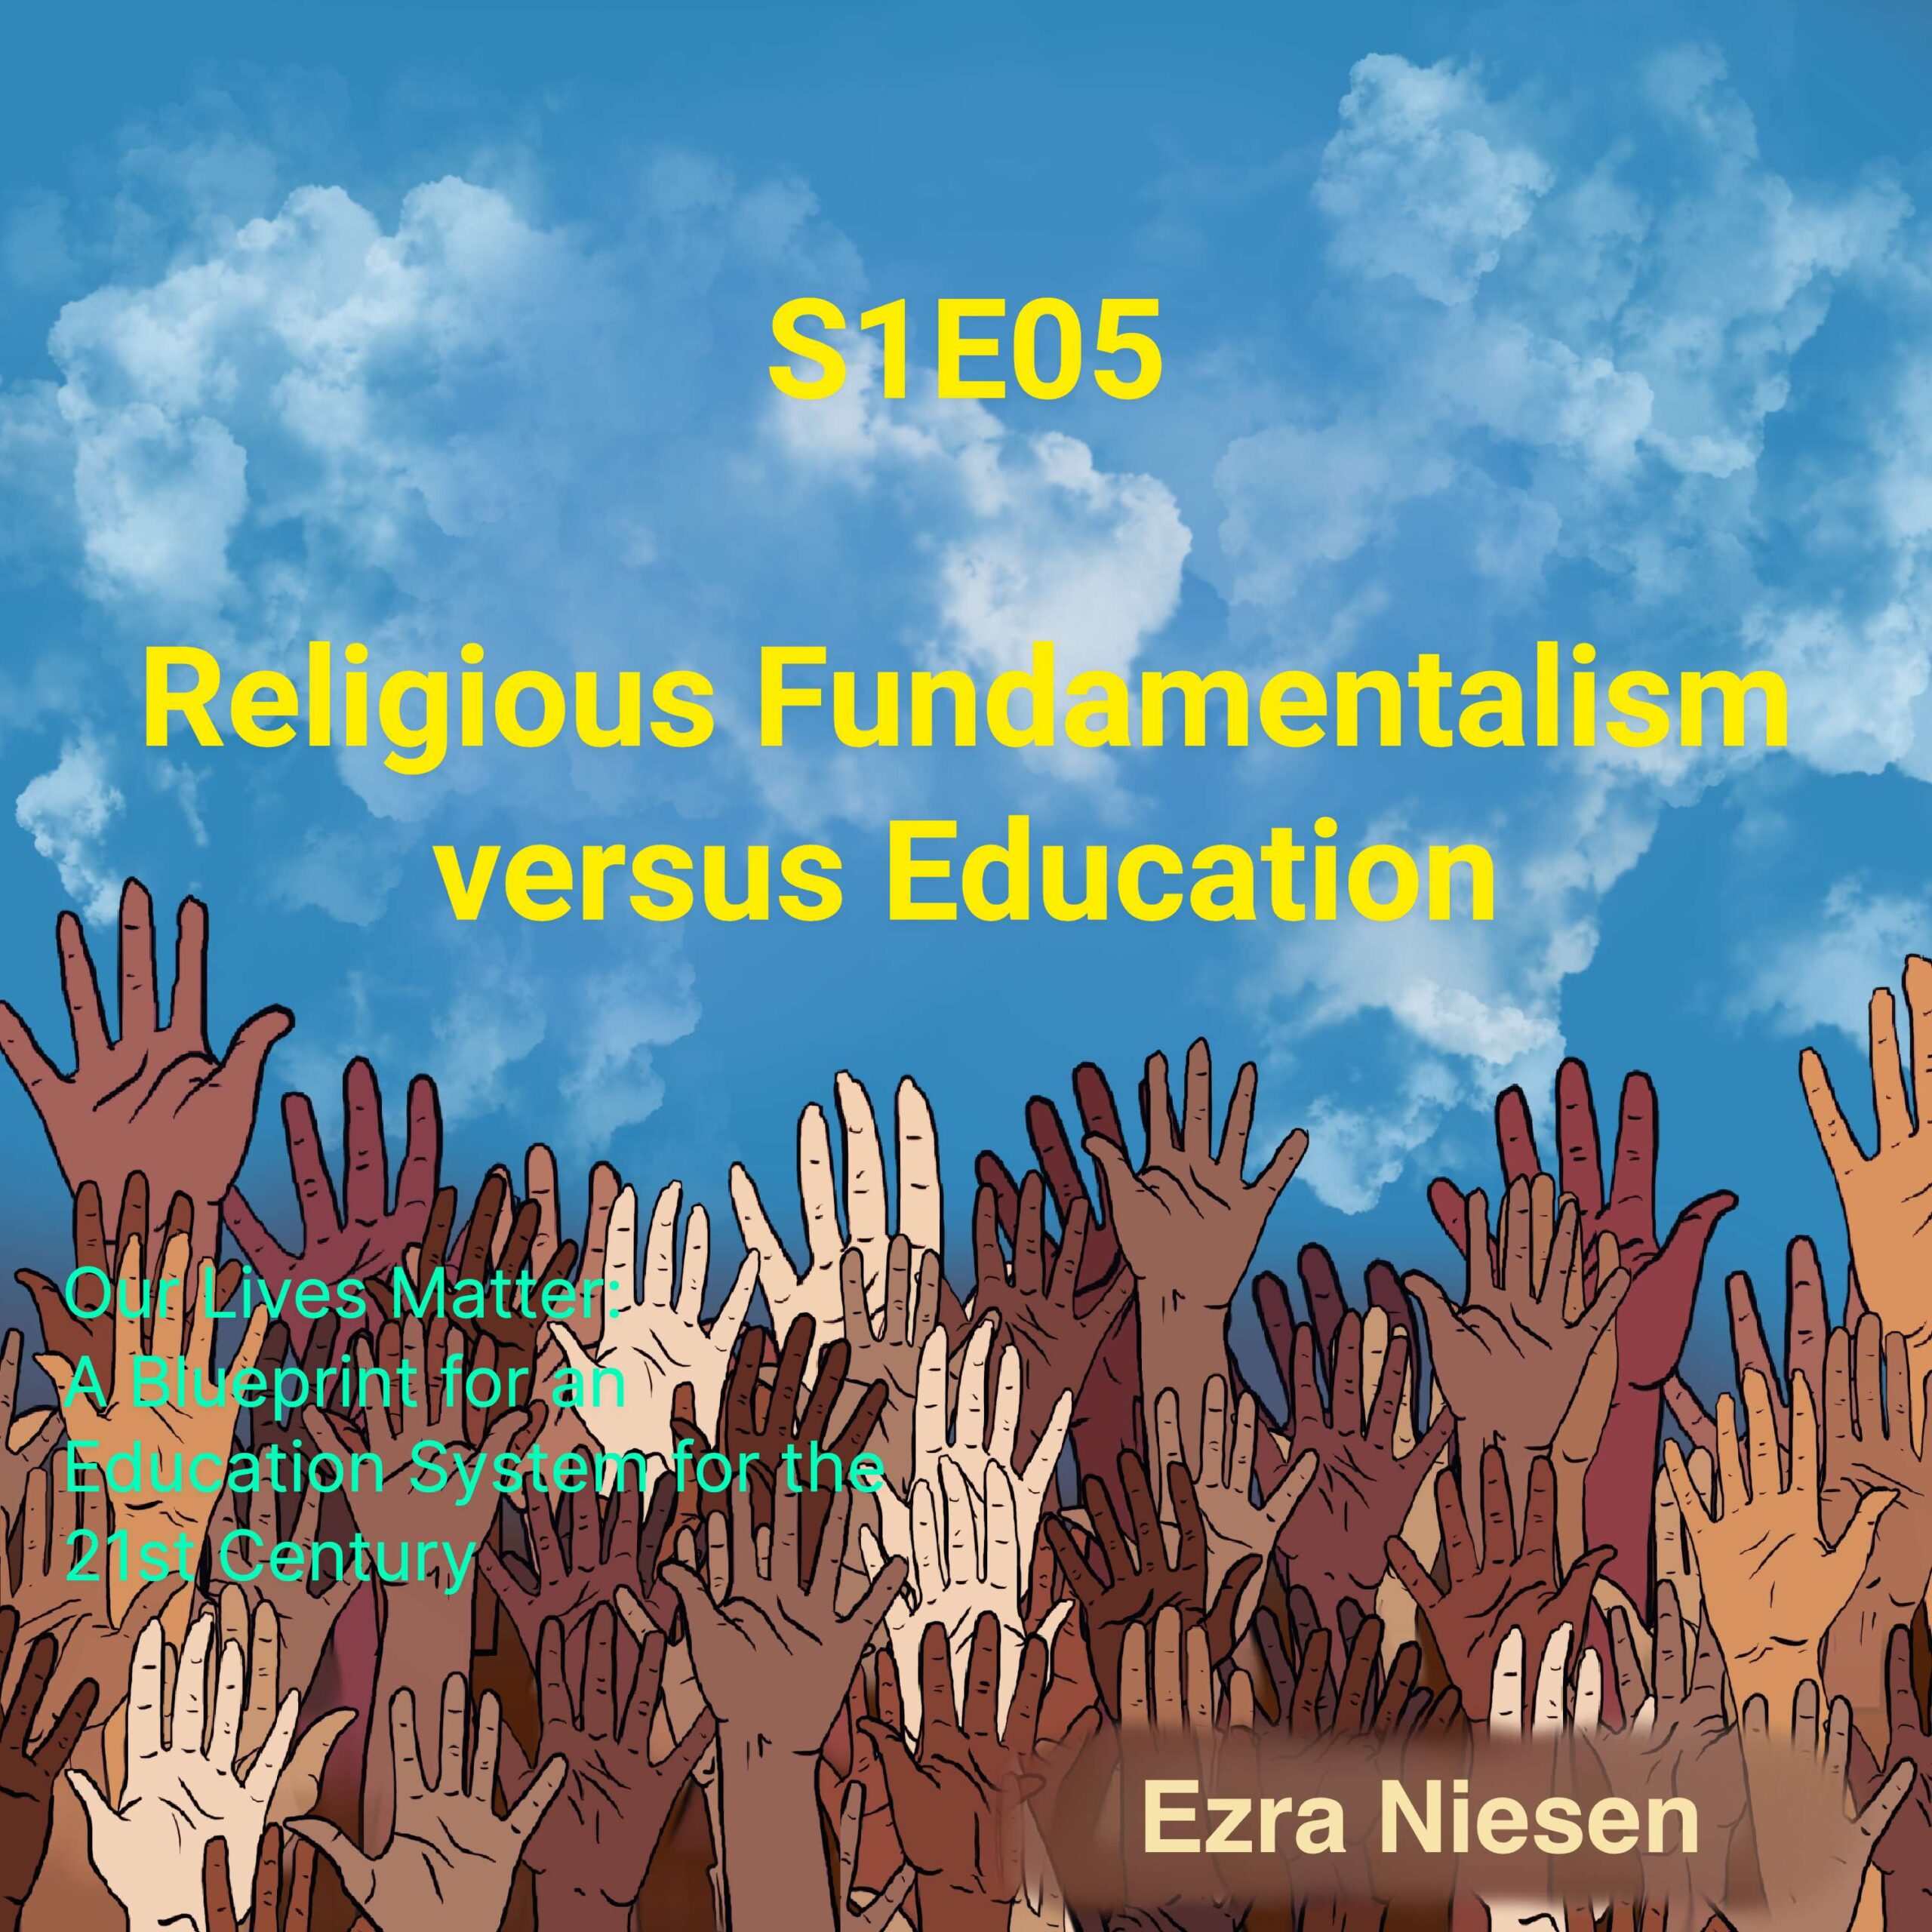 Our Lives Matter S1E05: Religious Fundamentalism versus Education